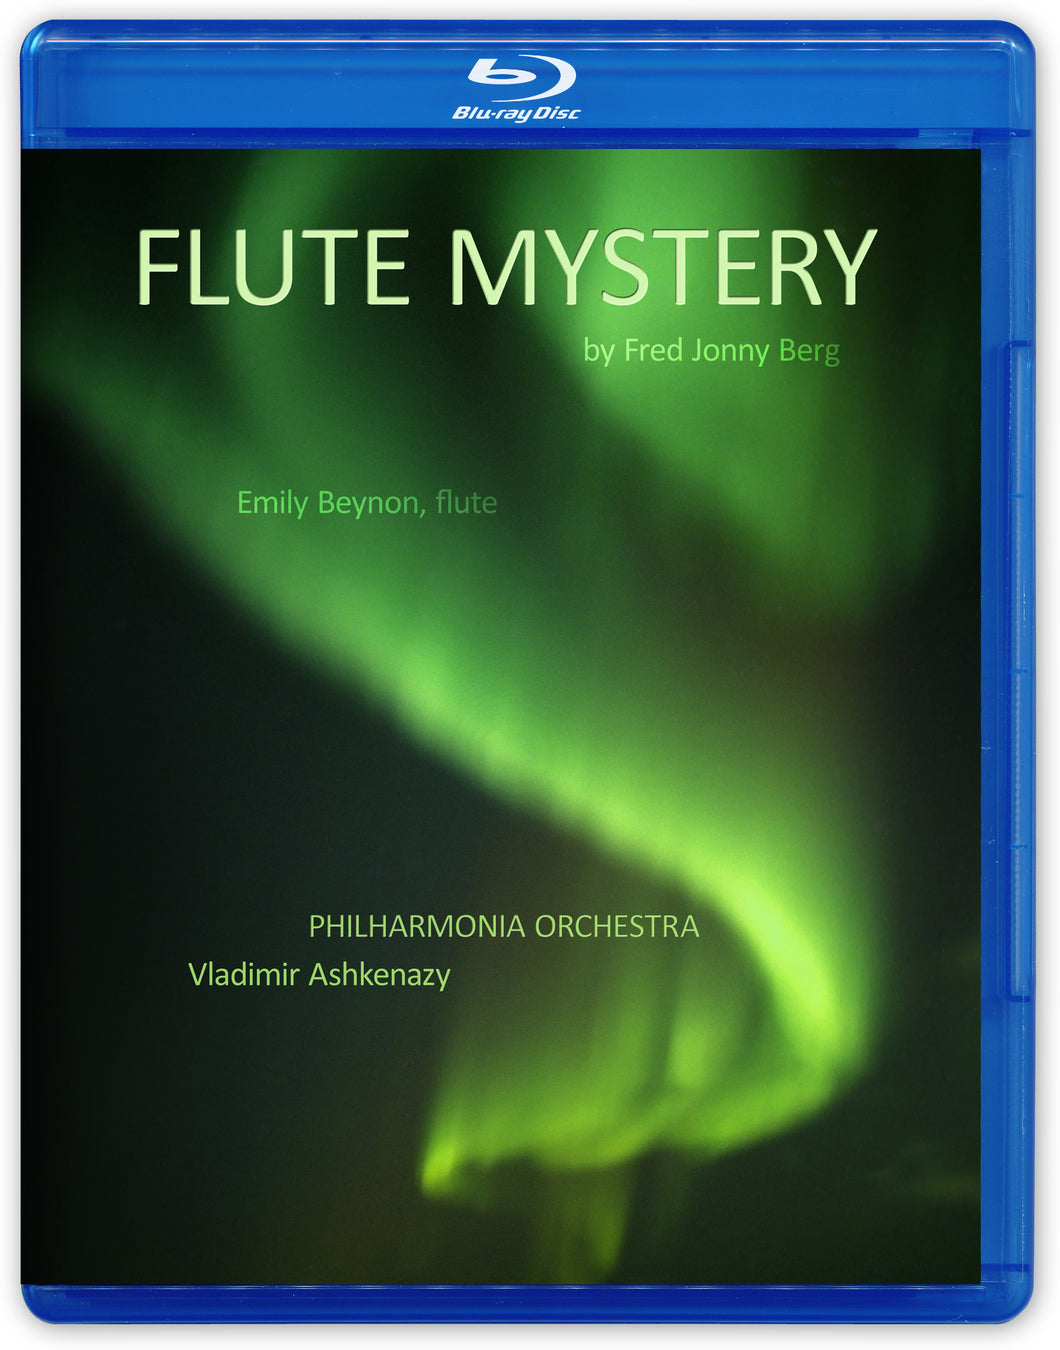 Flint Juventino Beppe: FLUTE MYSTERY - Philharmonia Orchestra, Vladimir Ashkenazy, Emily Beynon, Catherine Beynon